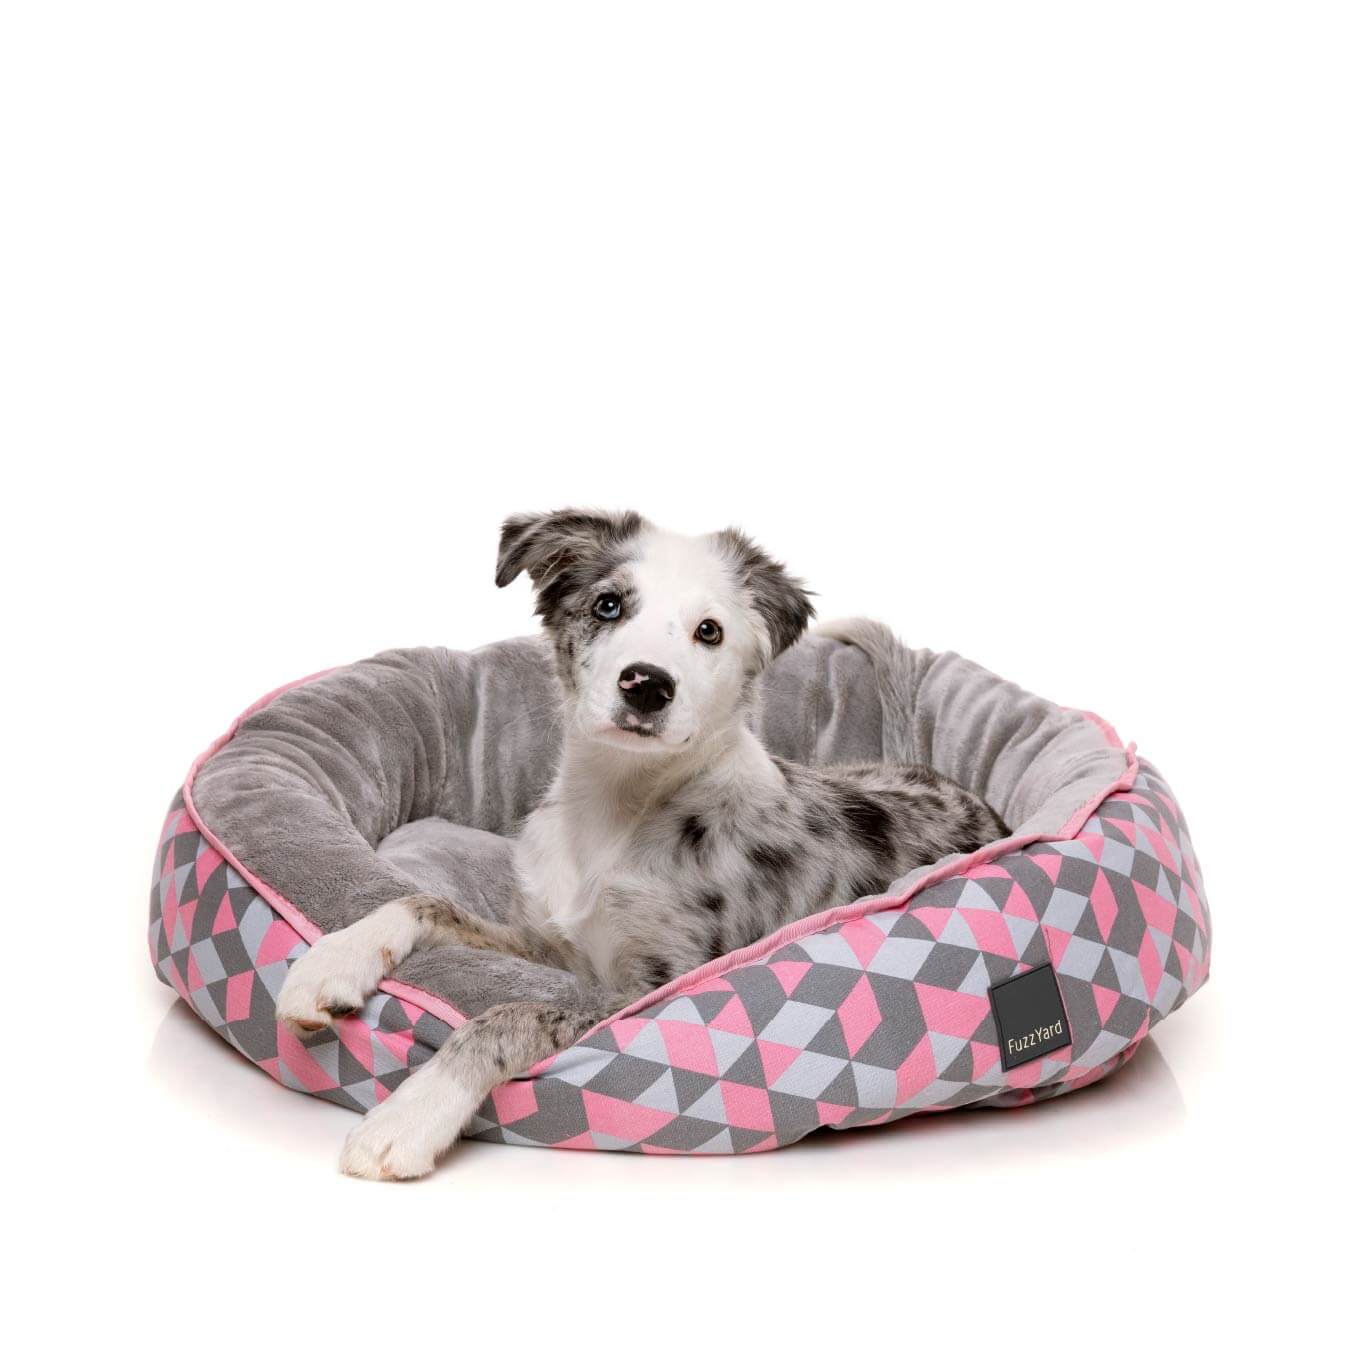 FuzzYard Reversible Pet Bed | Morganite - Vanillapup Online Pet Store